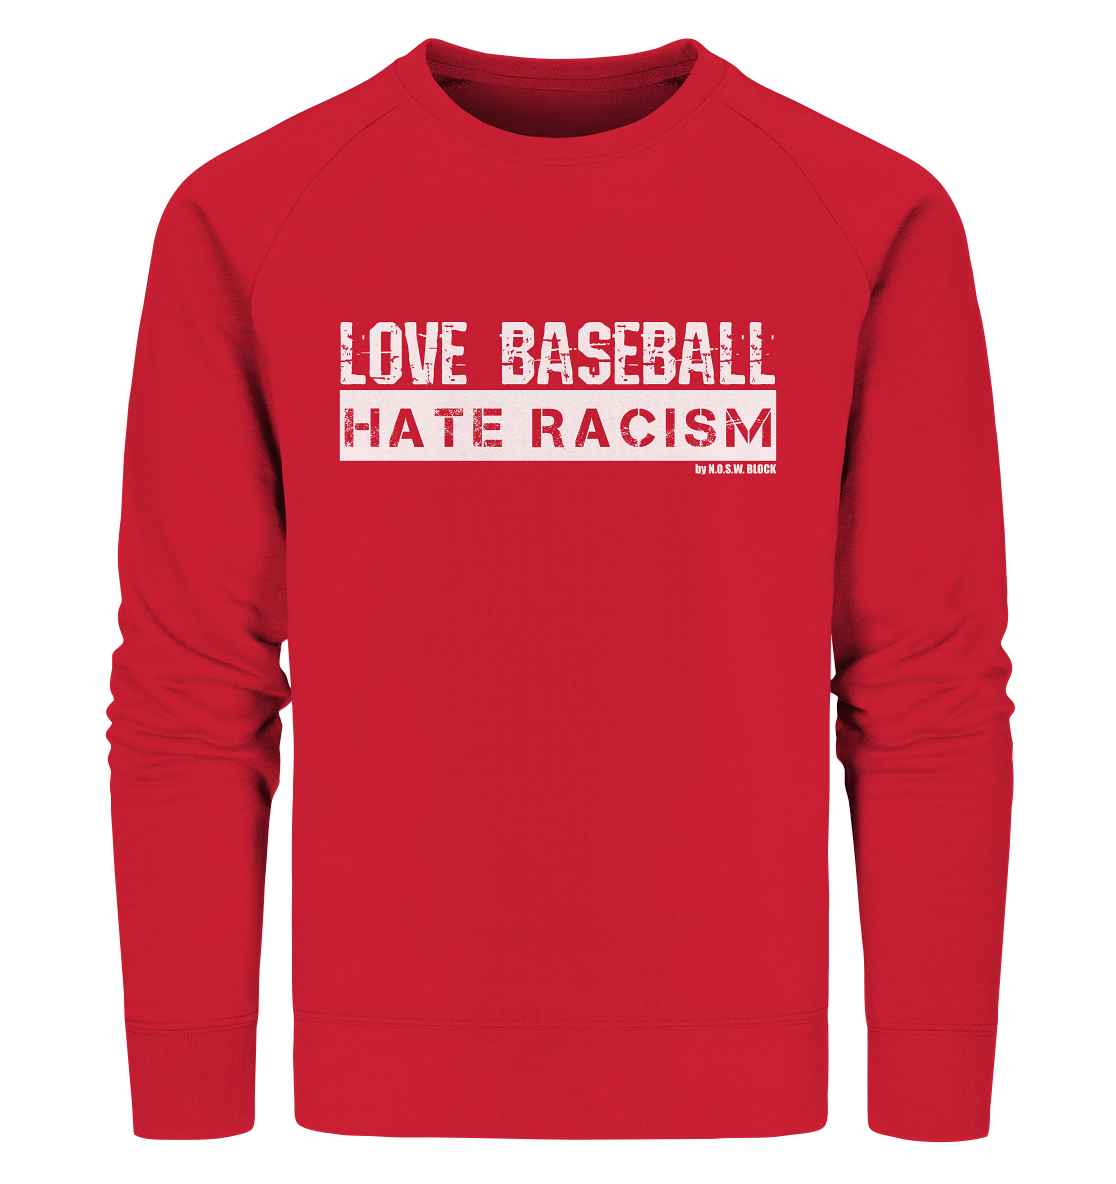 N.O.S.W. BLOCK Gegen Rechts Sweater "LOVE BASEBALL HATE RACISM" Männer Organic Sweatshirt rot